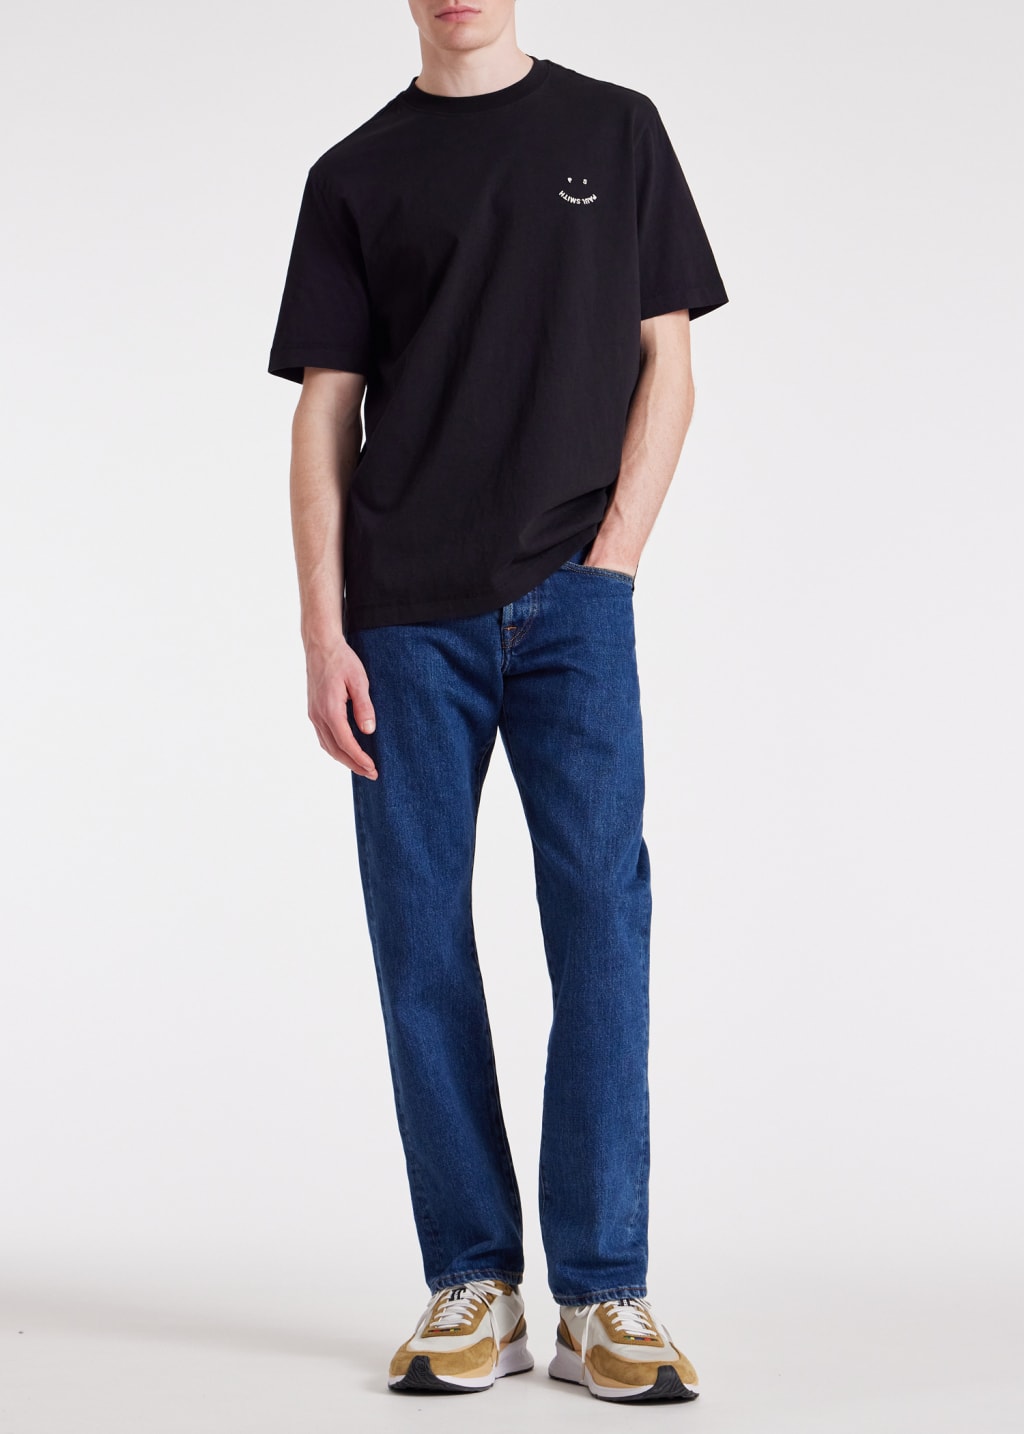 Model View - Black Cotton 'Happy' T-Shirt Paul Smith